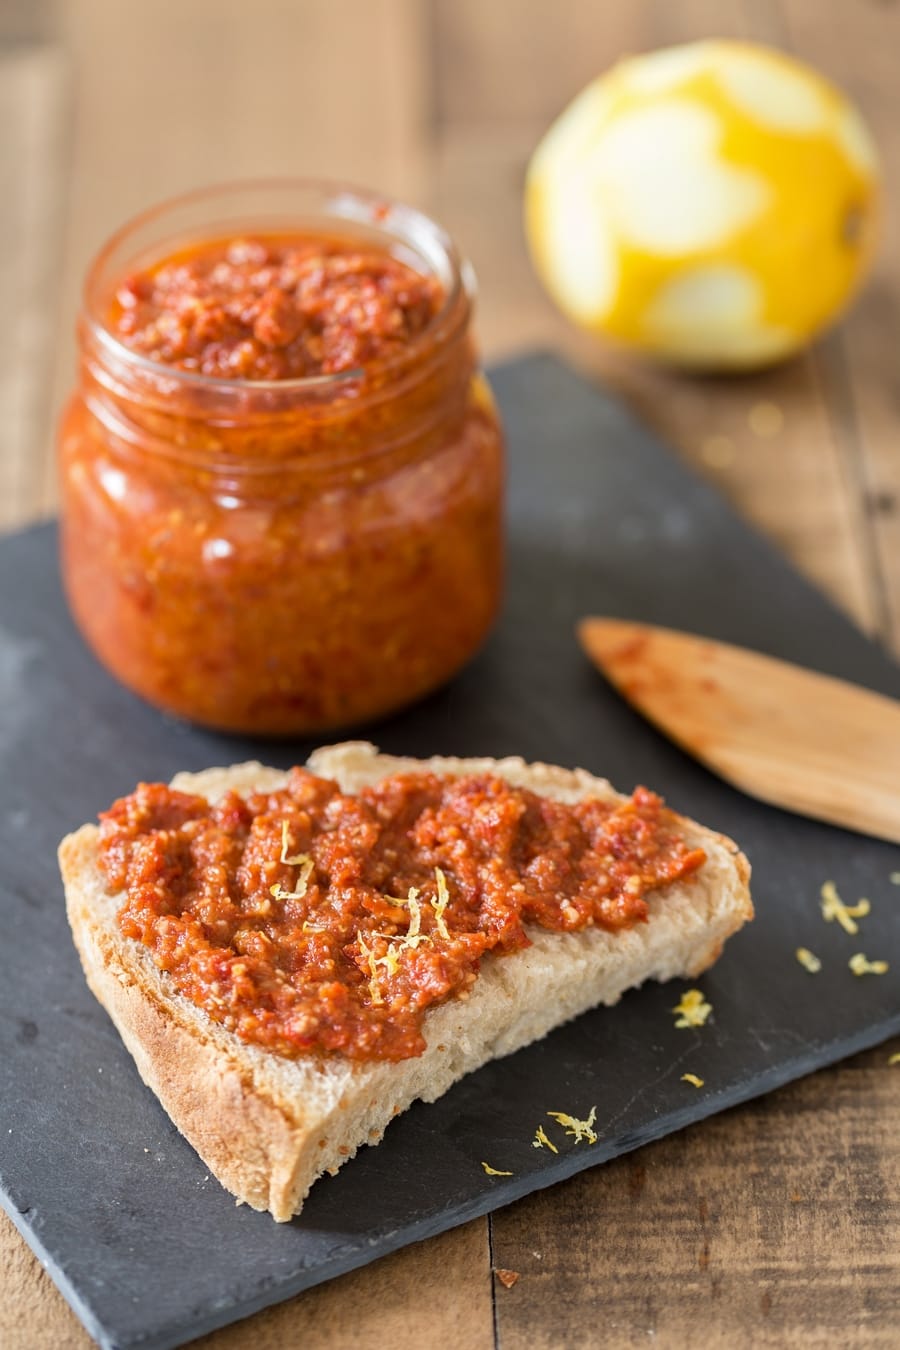 Piece of sourdough bread with sun-dried tomato pesto spread on top, pesto jar in the background.